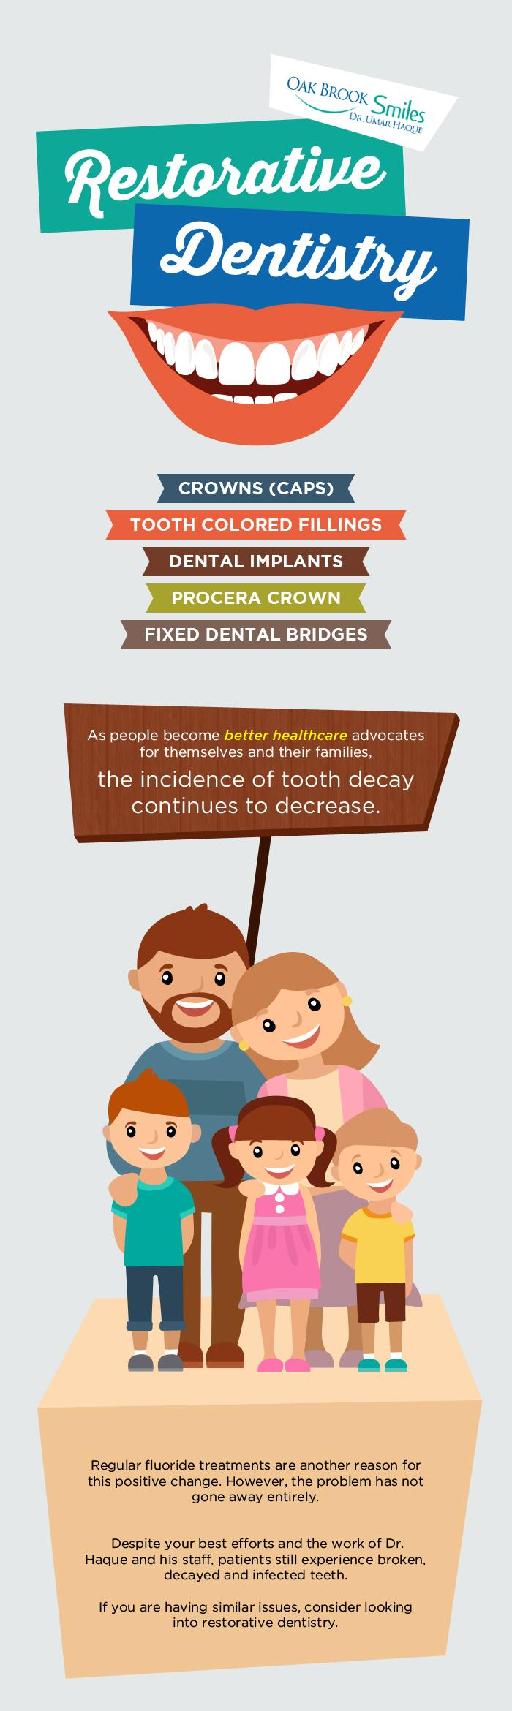 Best Restorative Dentistry Procedures at Oak Brook Smiles